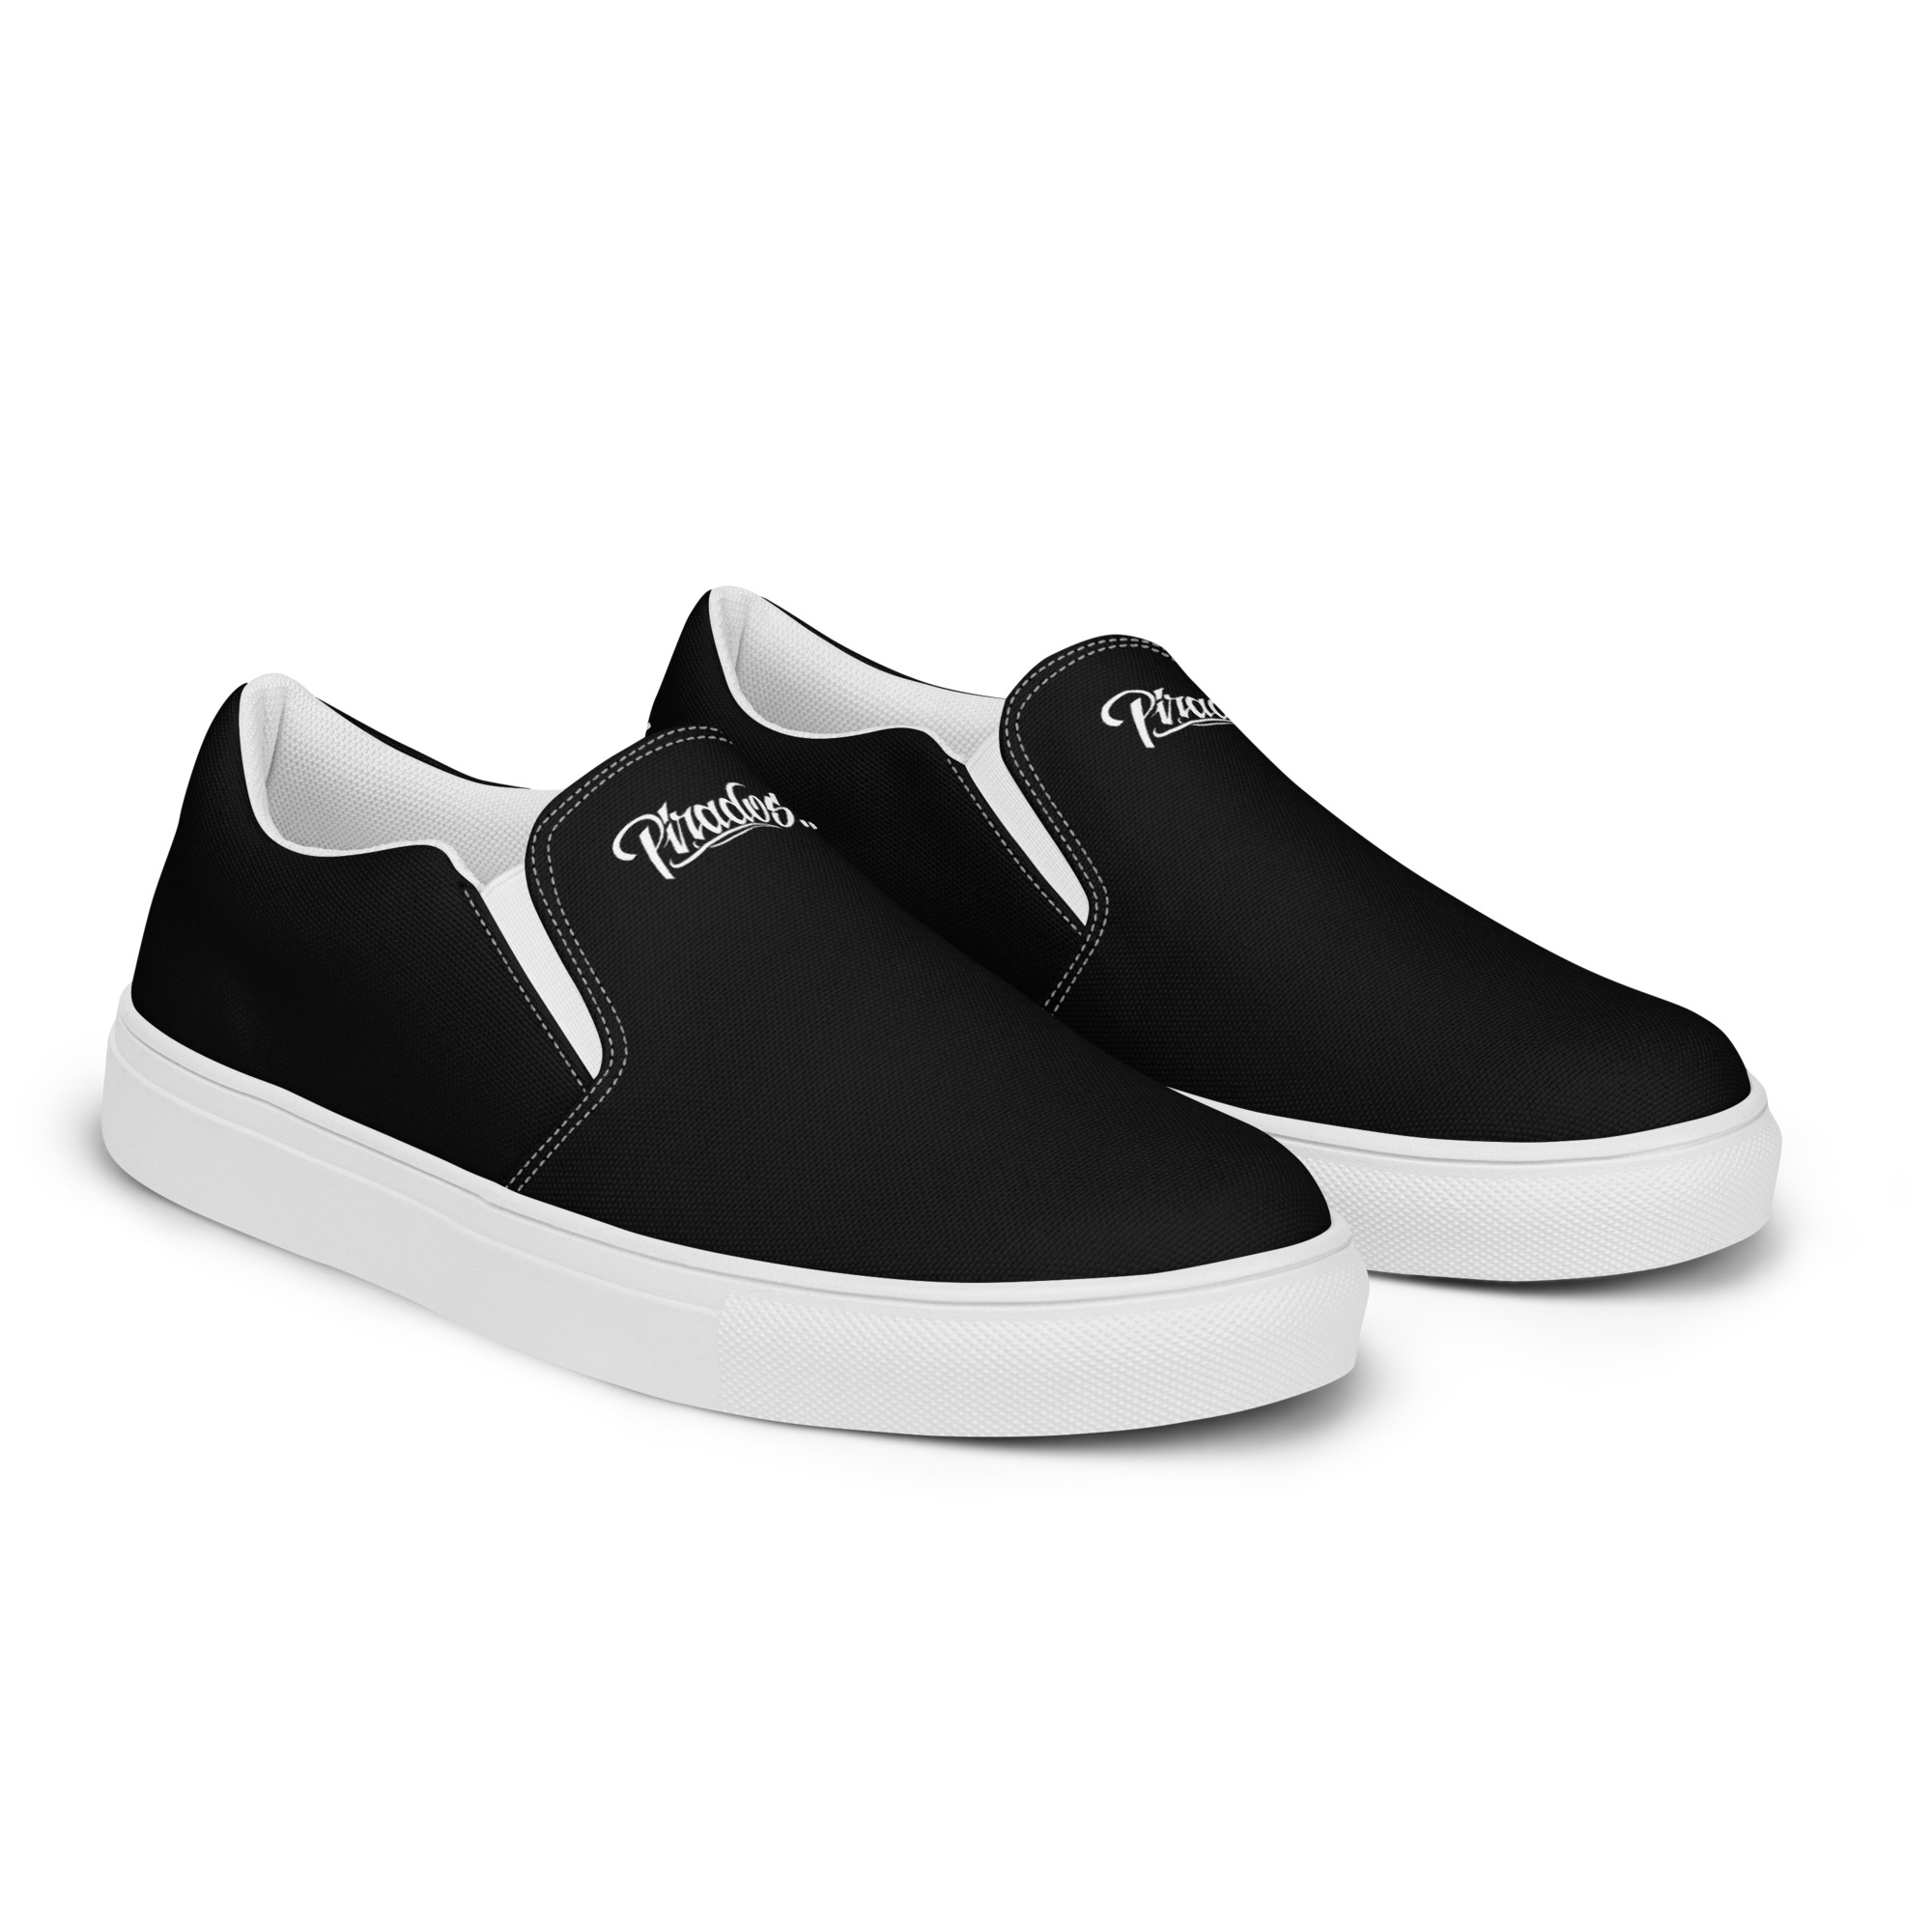 Men’s slip-on shoes x Pirados x Black & White – PIRADOS